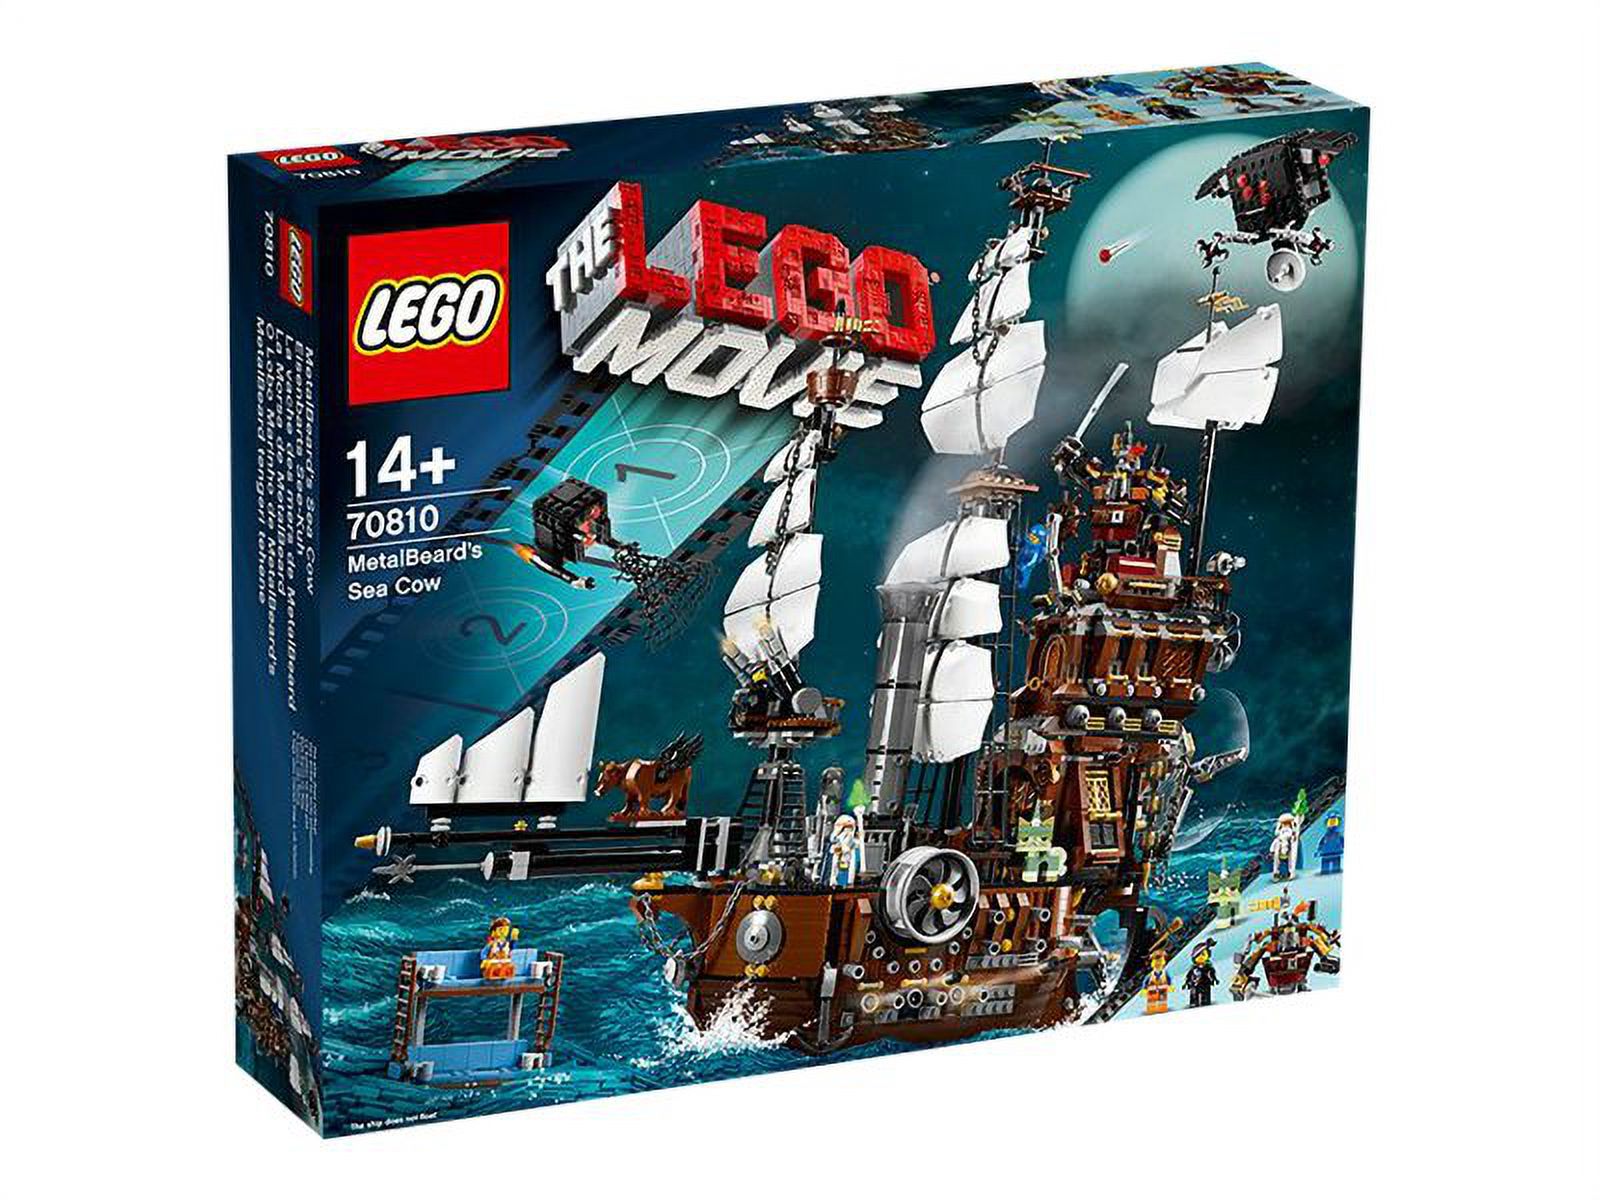 The LEGO Movie 70810 - MetalBeard's Sea Cow - image 2 of 5